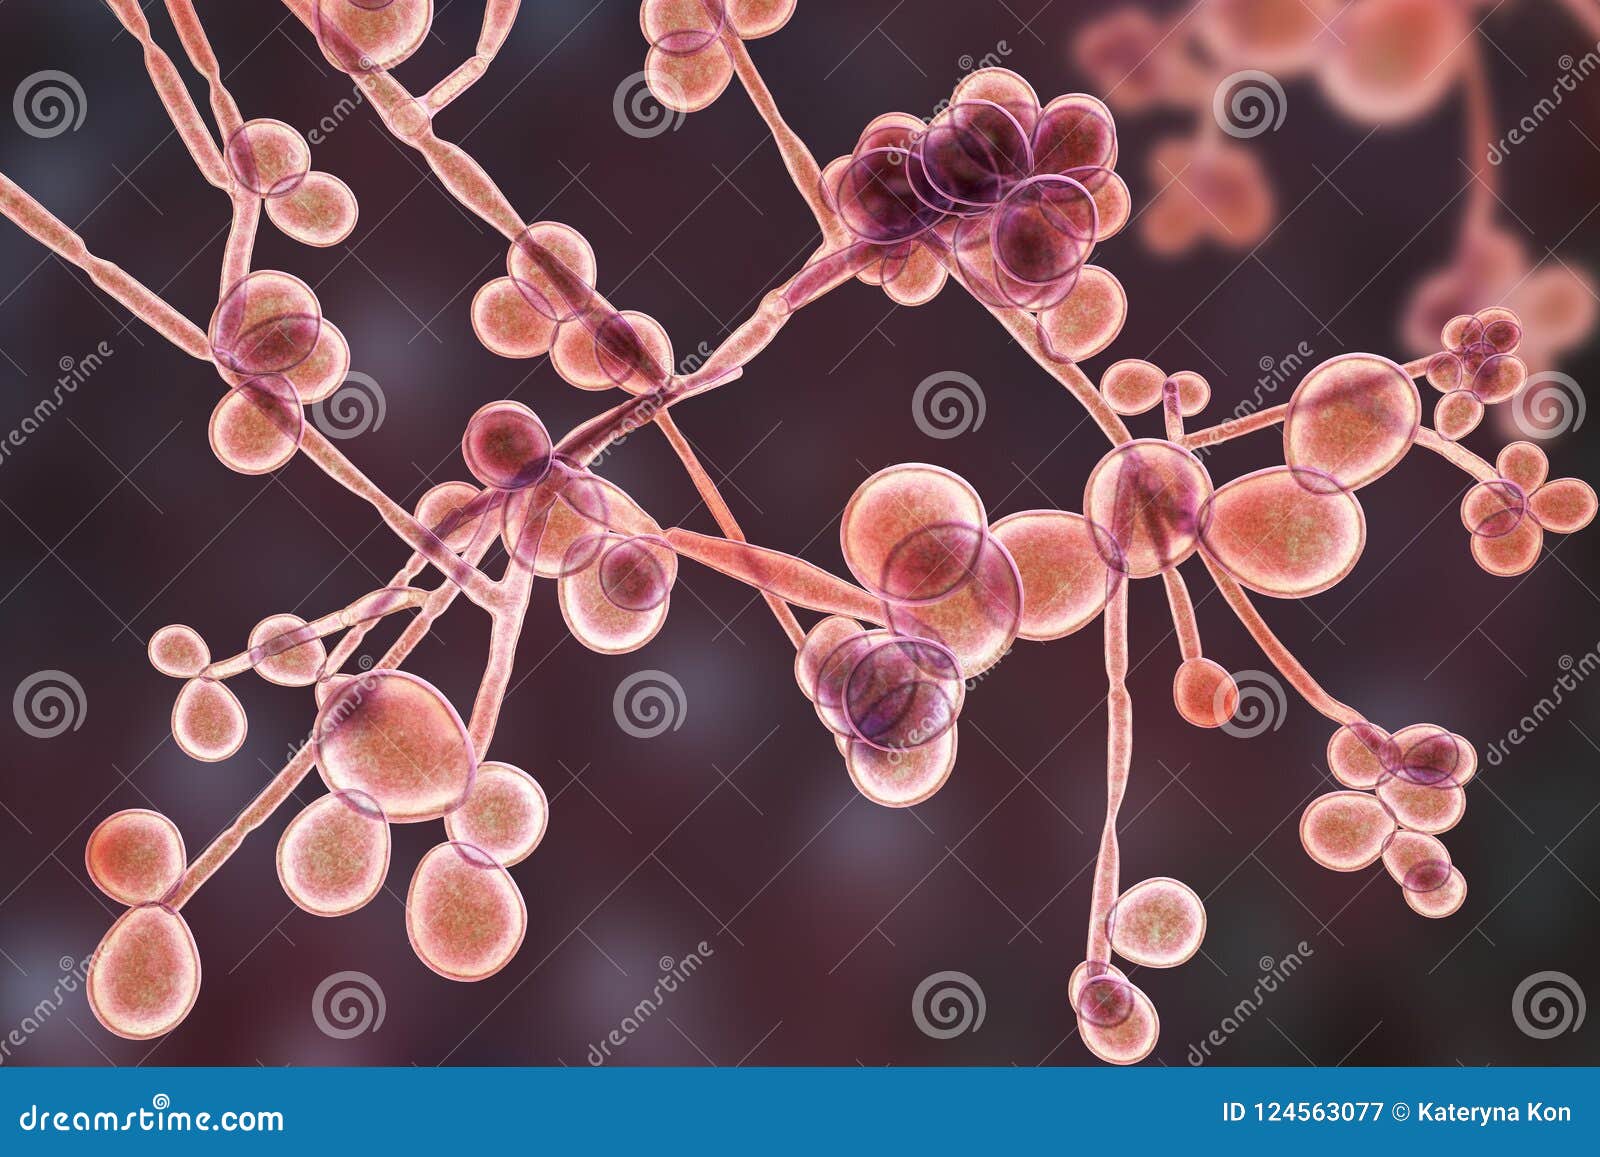 Fungi Candida Which Cause Candidiasis Thrush Stock Illustration